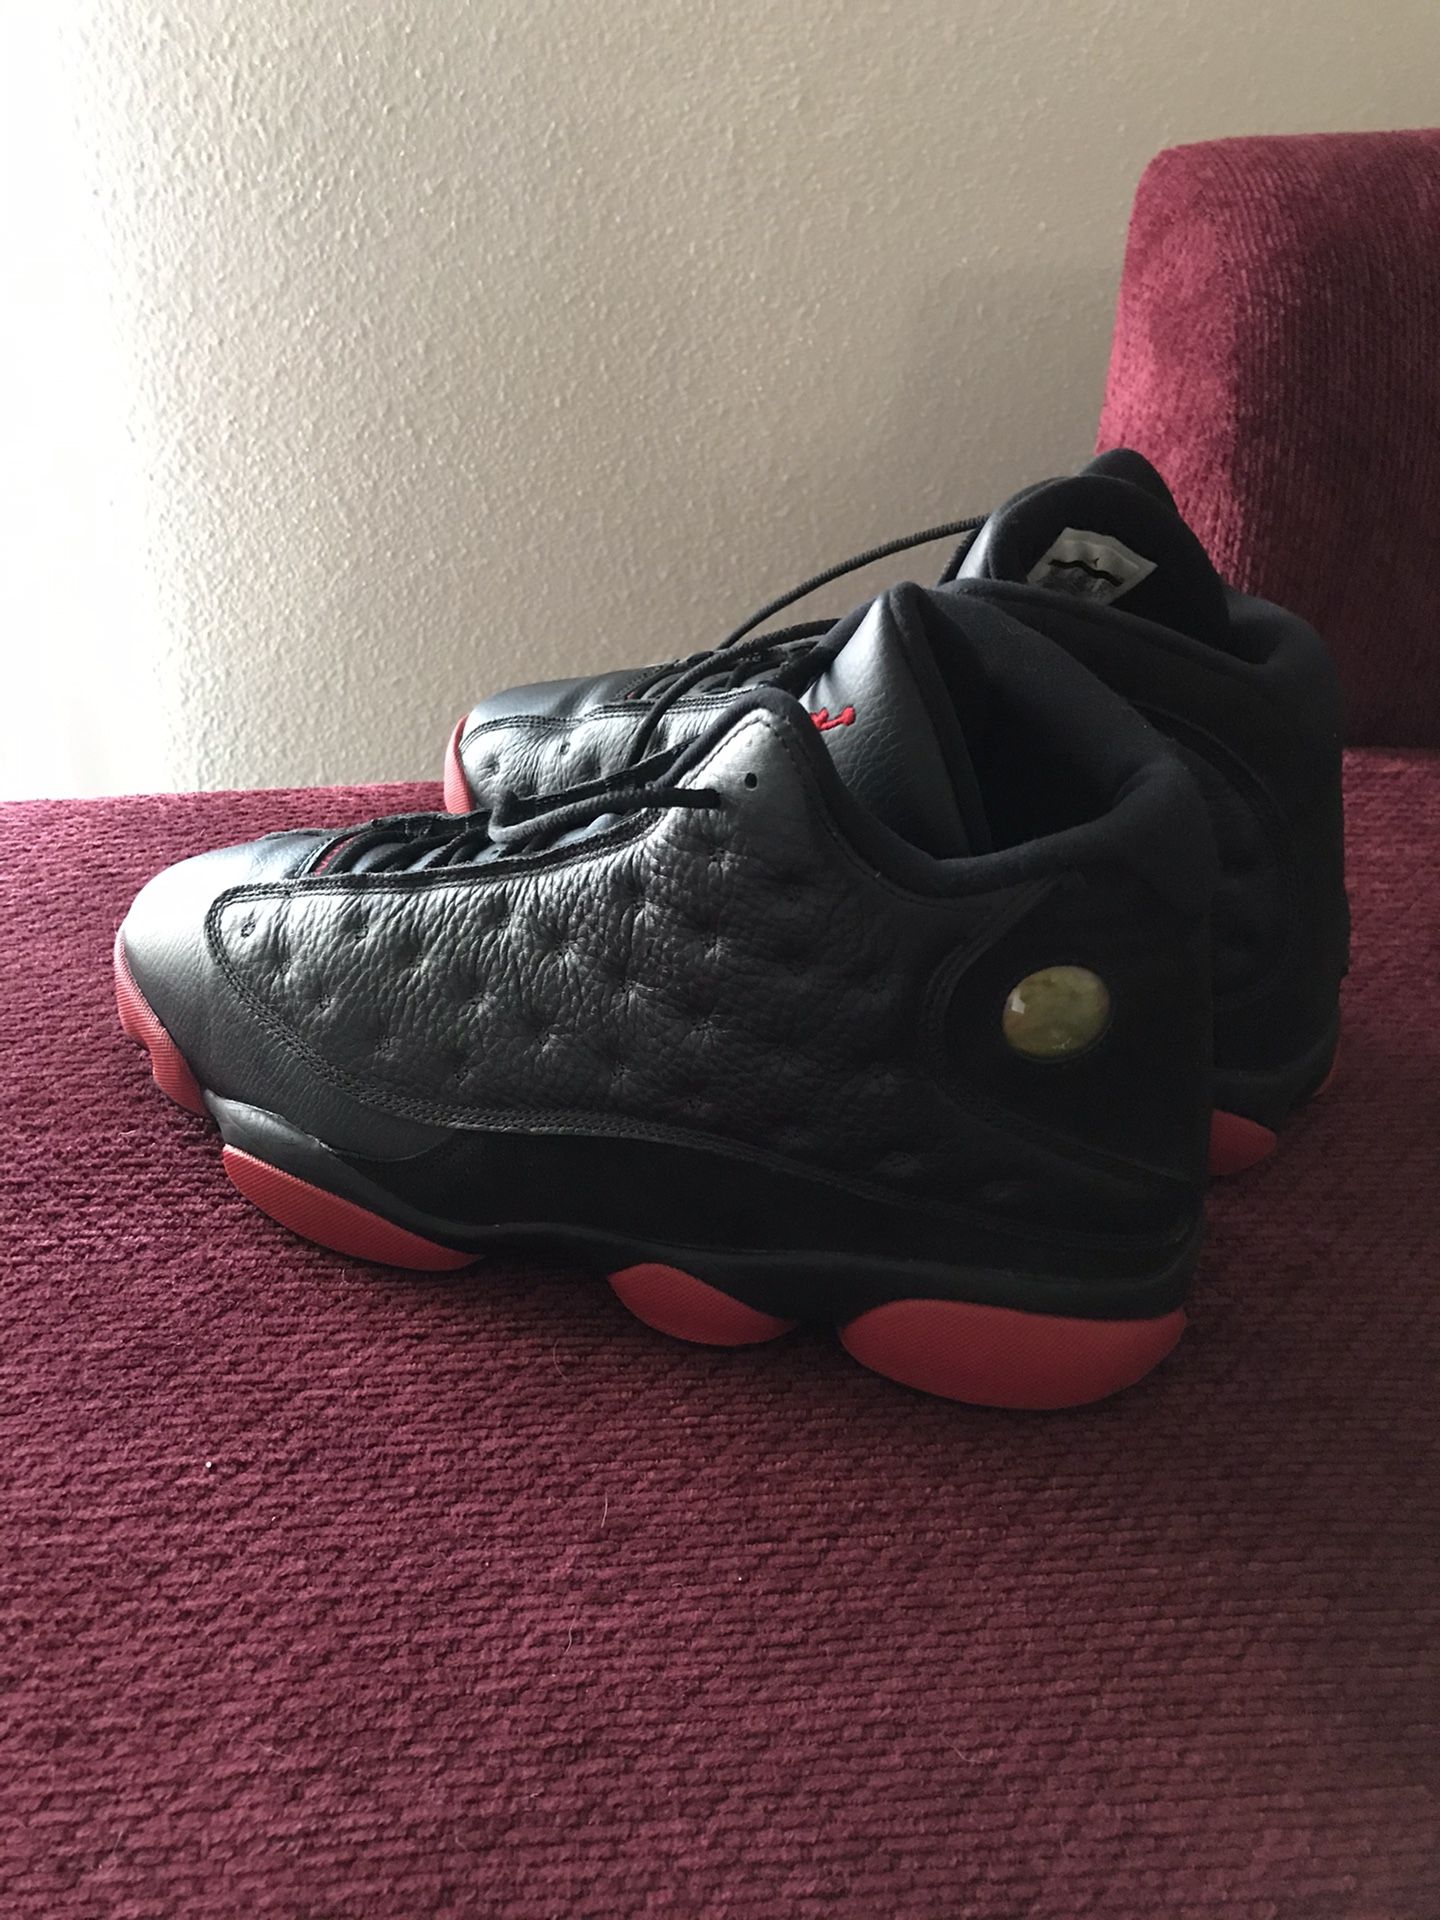 Retro Jordan 13 Size 14 $90